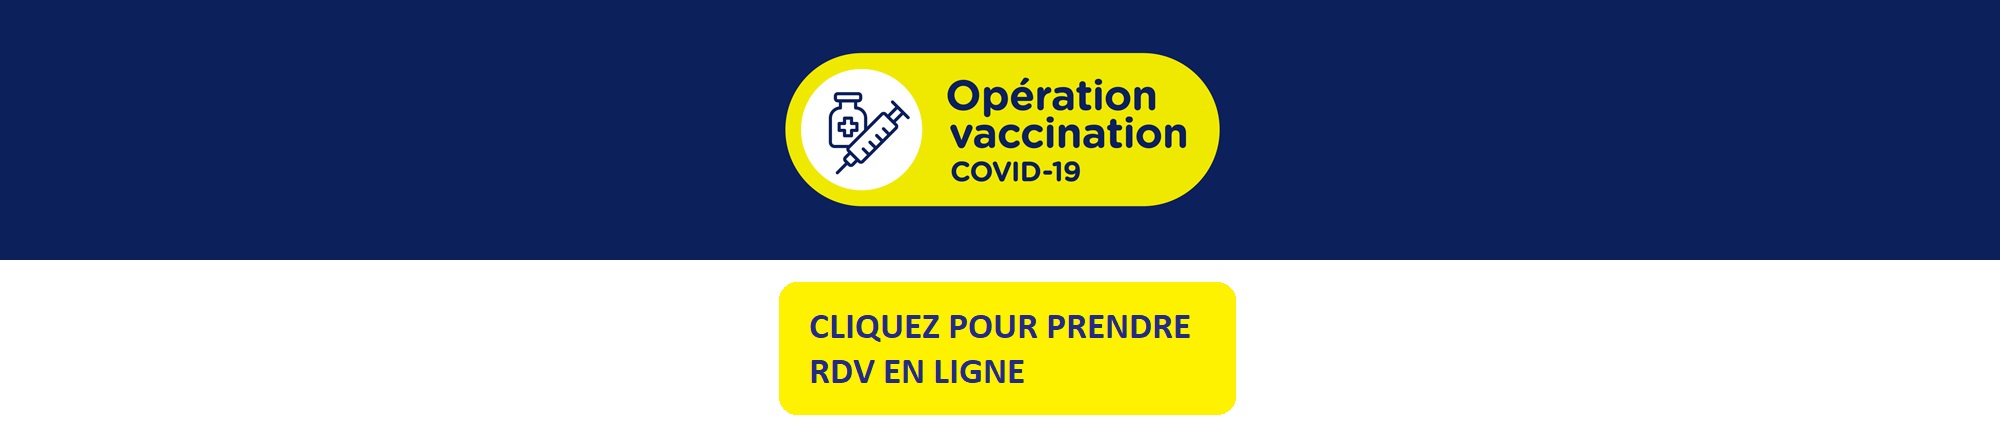 vaccination-covid_222000x260_FR_desktop (1)